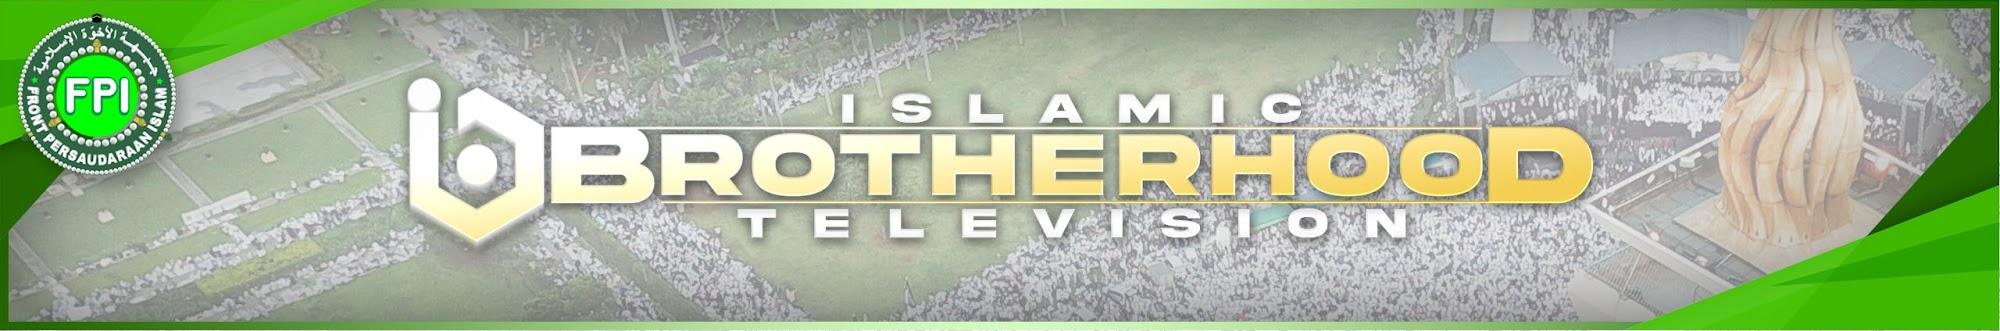 Islamic Brotherhood Television